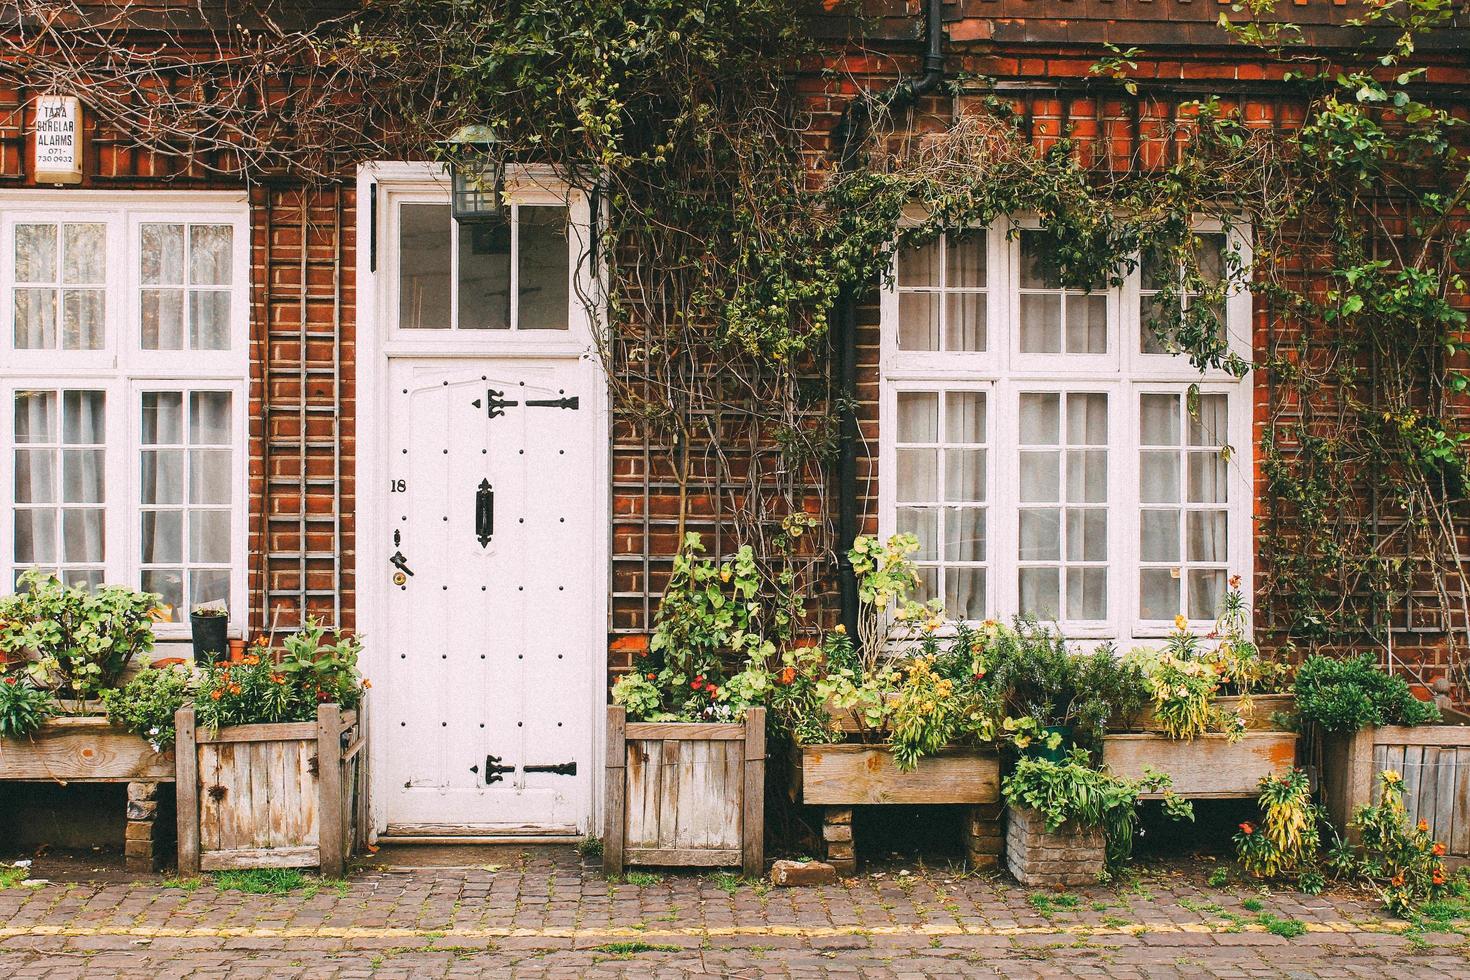 Londres, Angleterre, 2020 - plantes assorties devant une maison photo